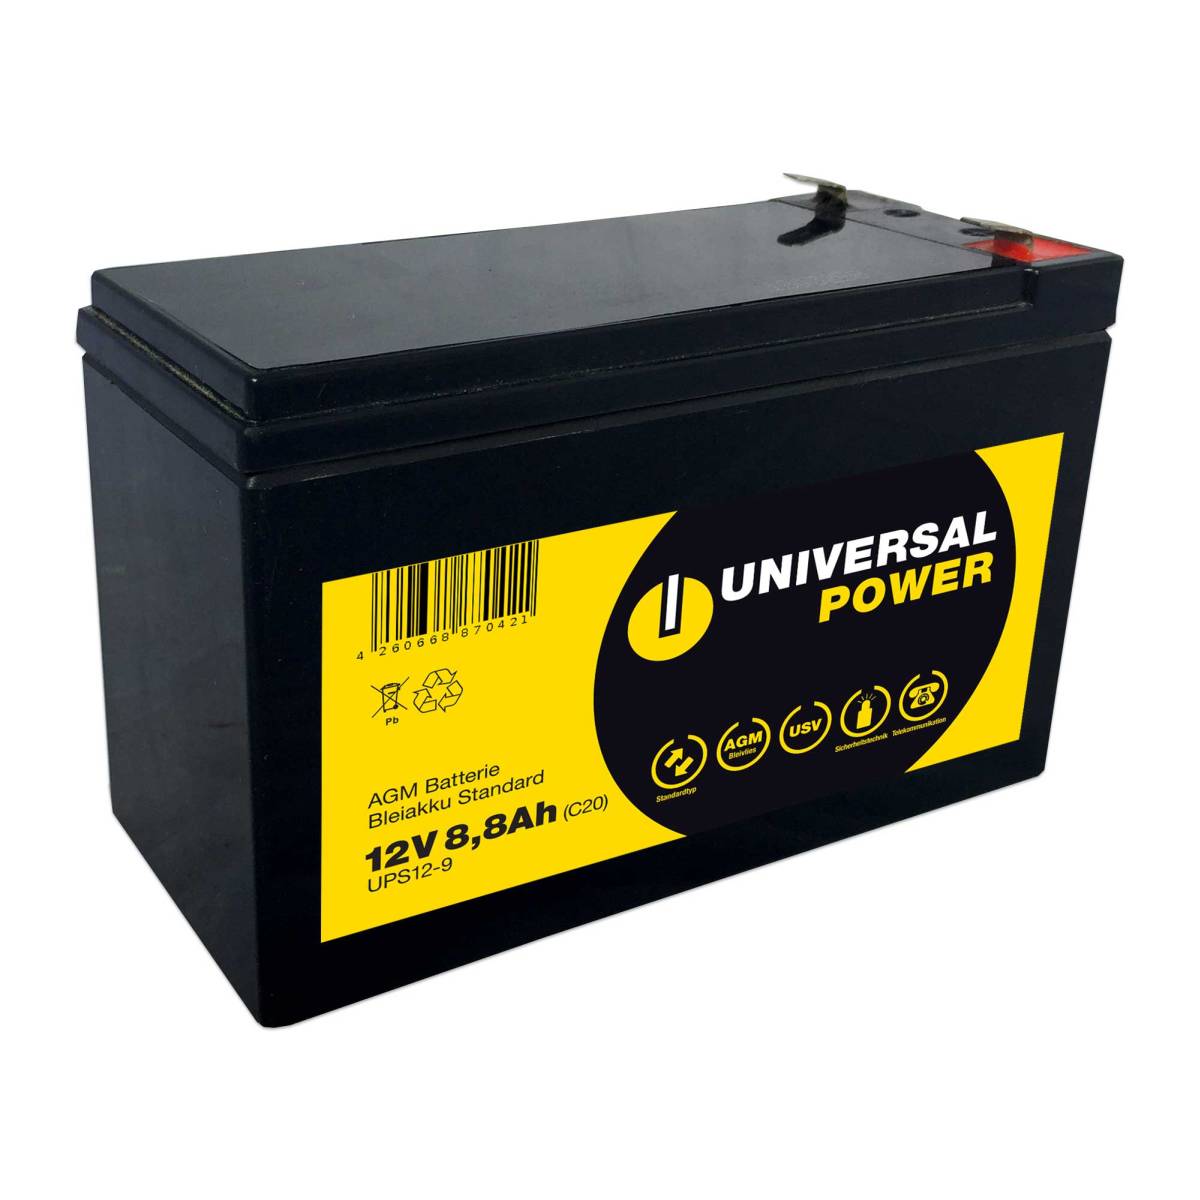 Universal Power AGM UPS12-9 12V 8,8Ah AGM Batteria UPS senza manutenzione